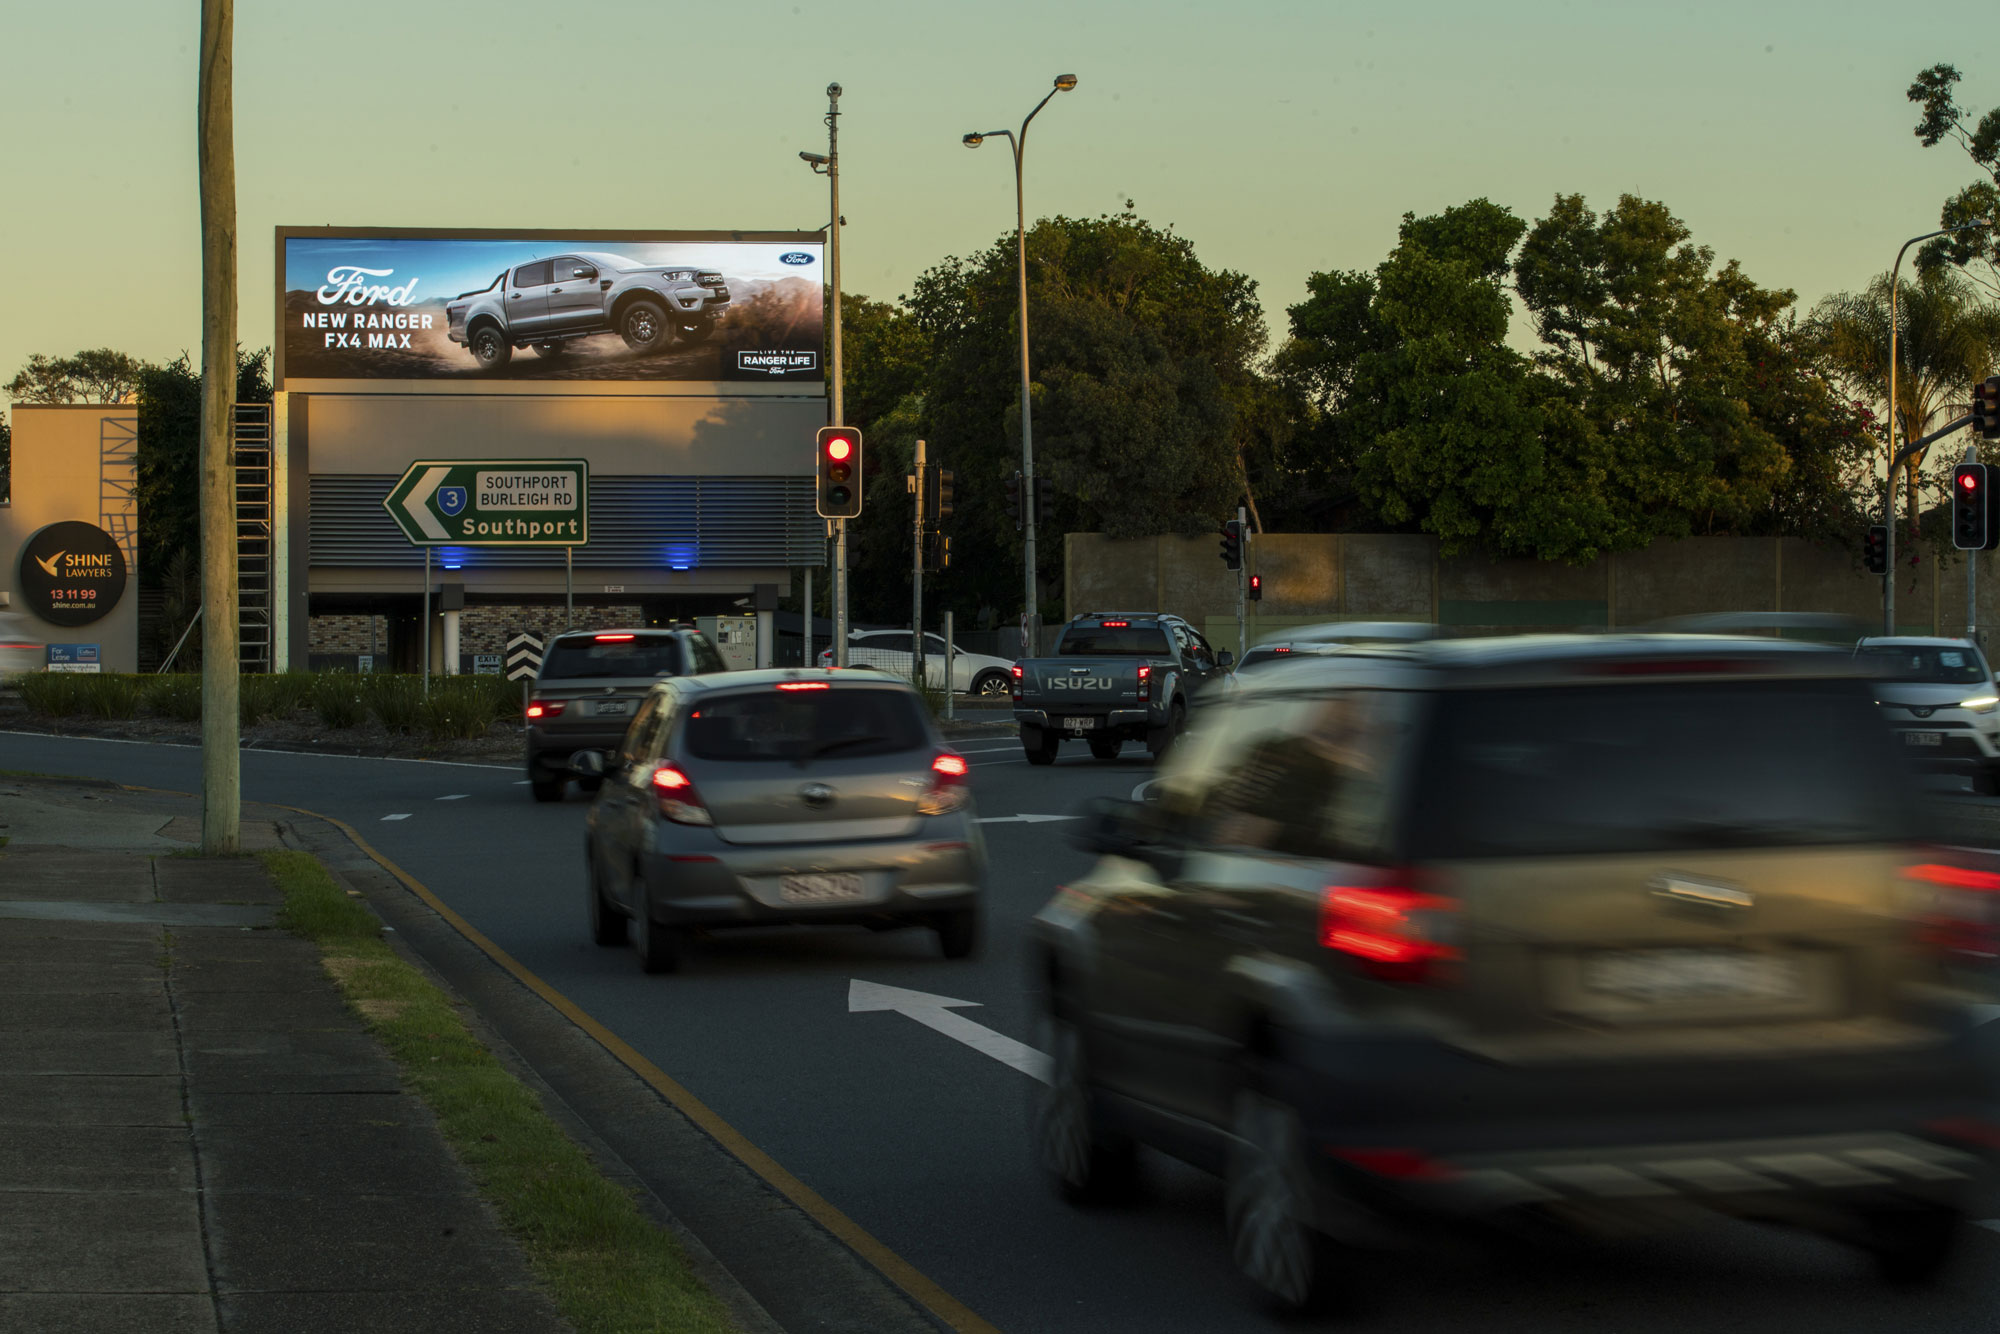 Ford billboard advertising on road